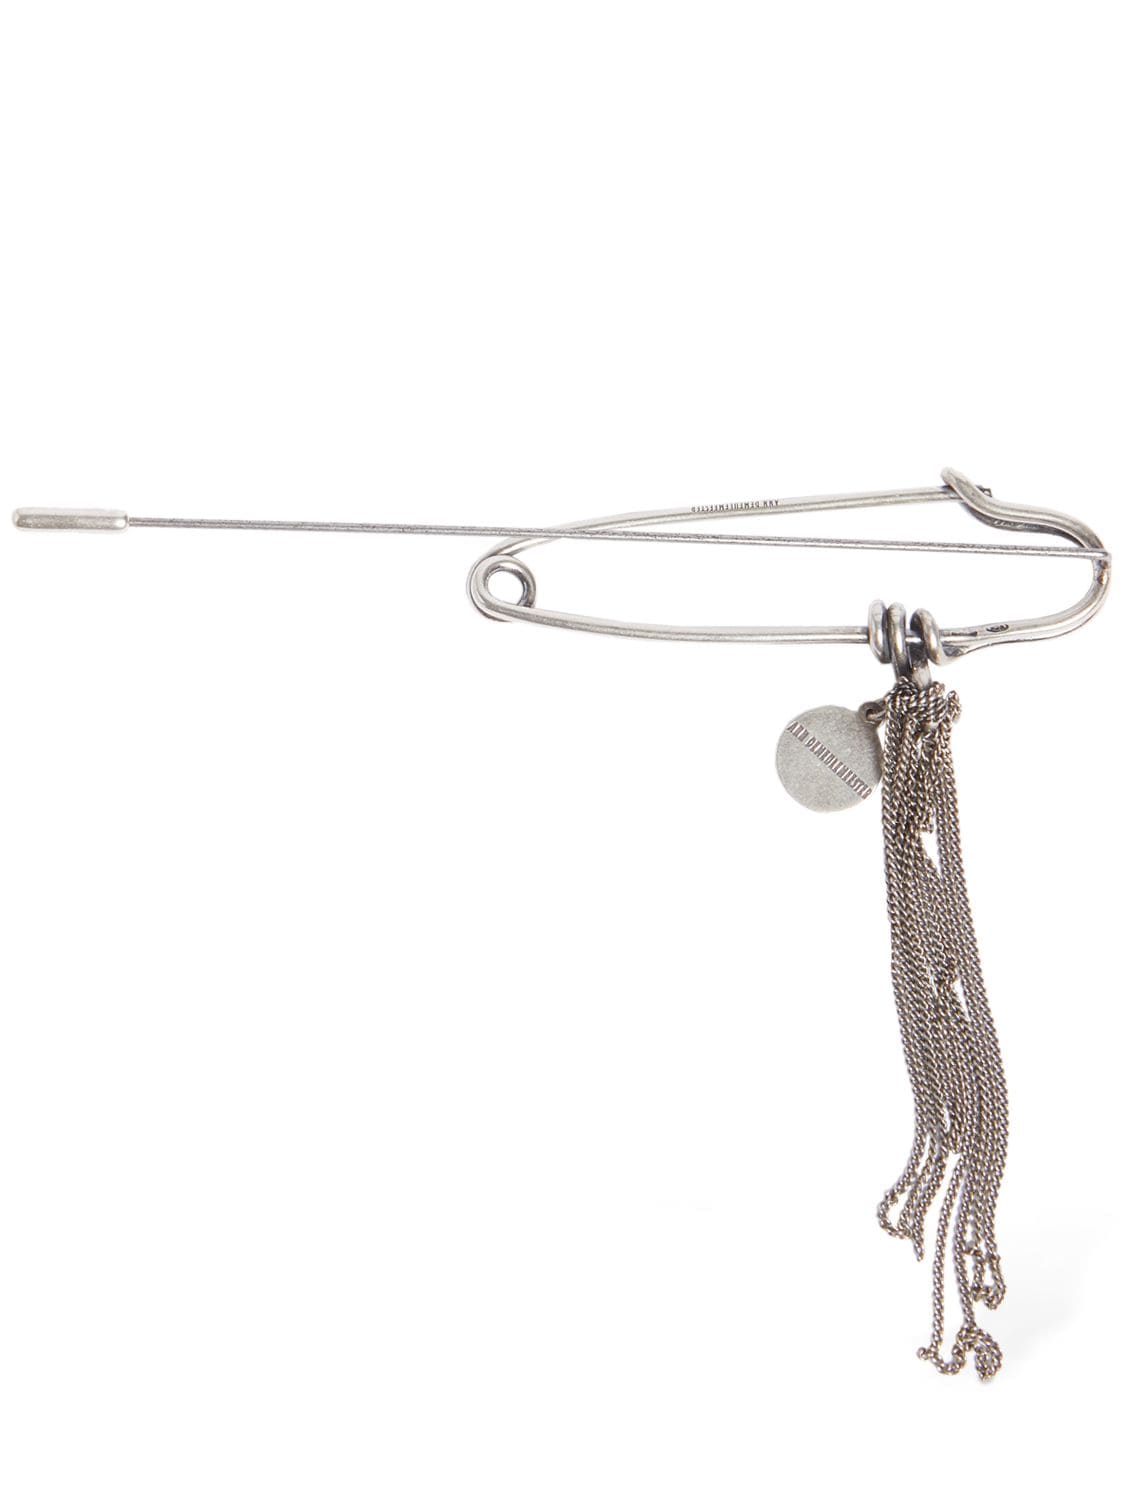 Ann Demeulemeester Kasu Safety Pin W/ Chains In Antique Silver